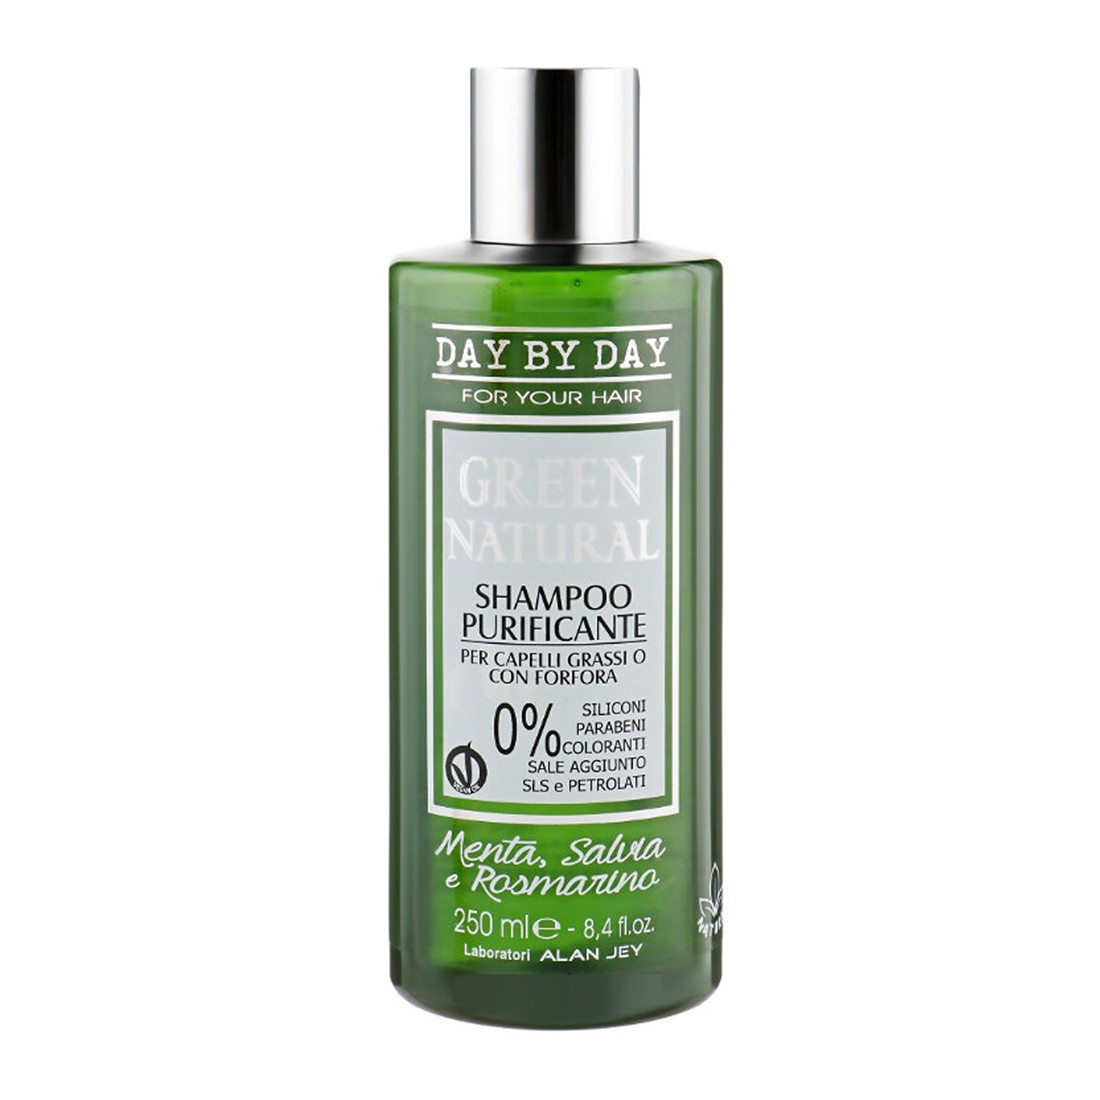 Alan Jey Green Natural Shampoo Purificante Шампунь очищающий для жирных волос с перхотью